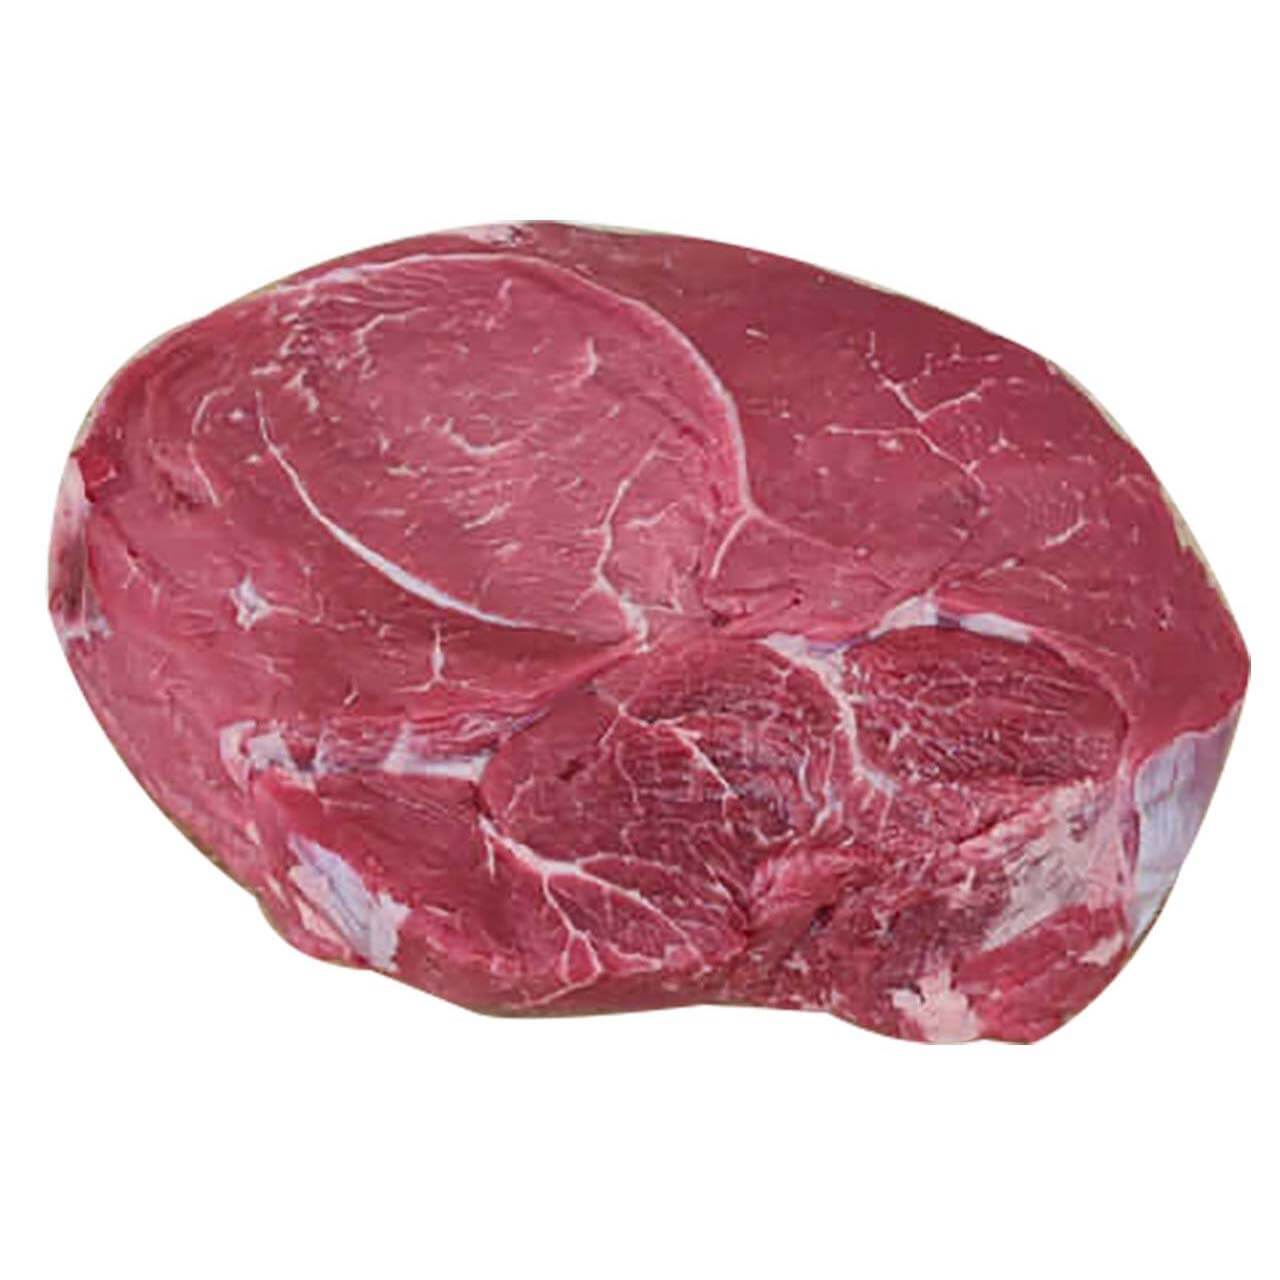 Beef Sirloin Roast - Organic